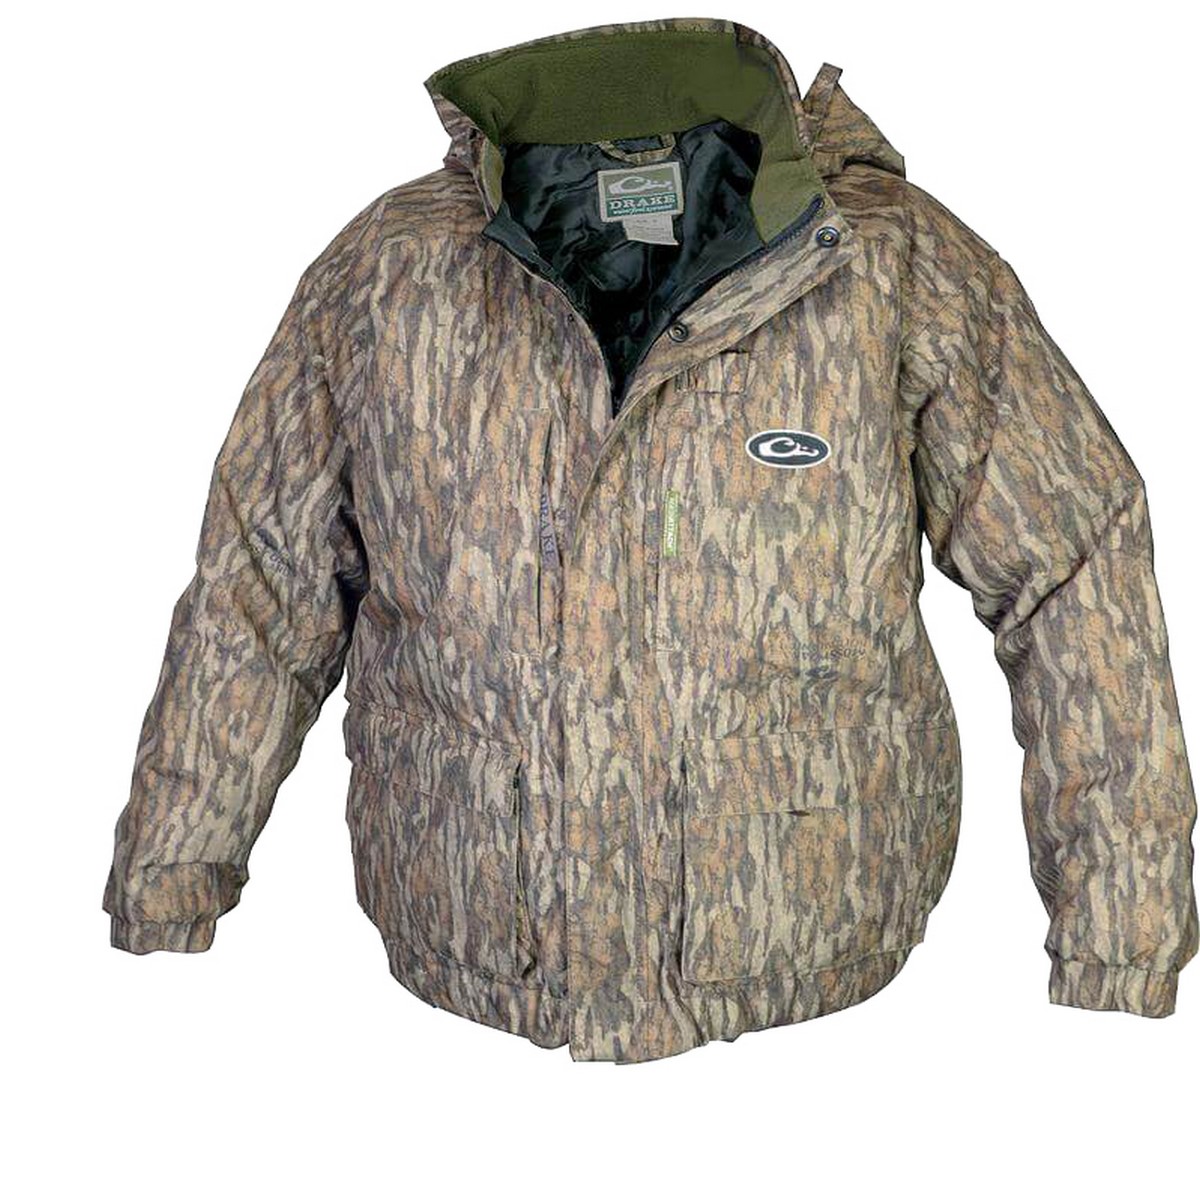 drake jacket mossy oak bottomland